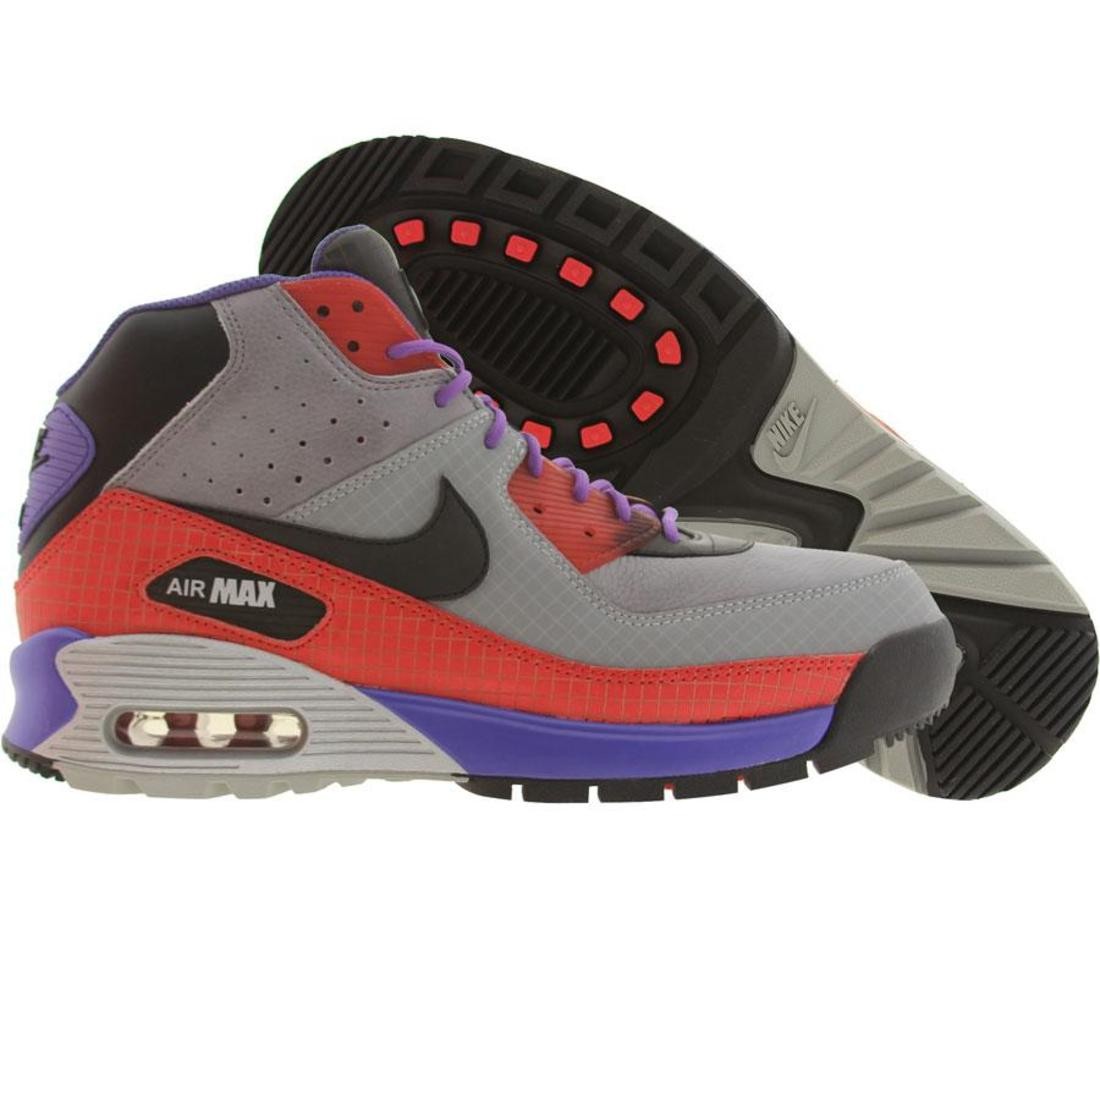 Nike Max 90 Premium Boot Transformers Pack (atom red / black / varsity purple / metallic silver)